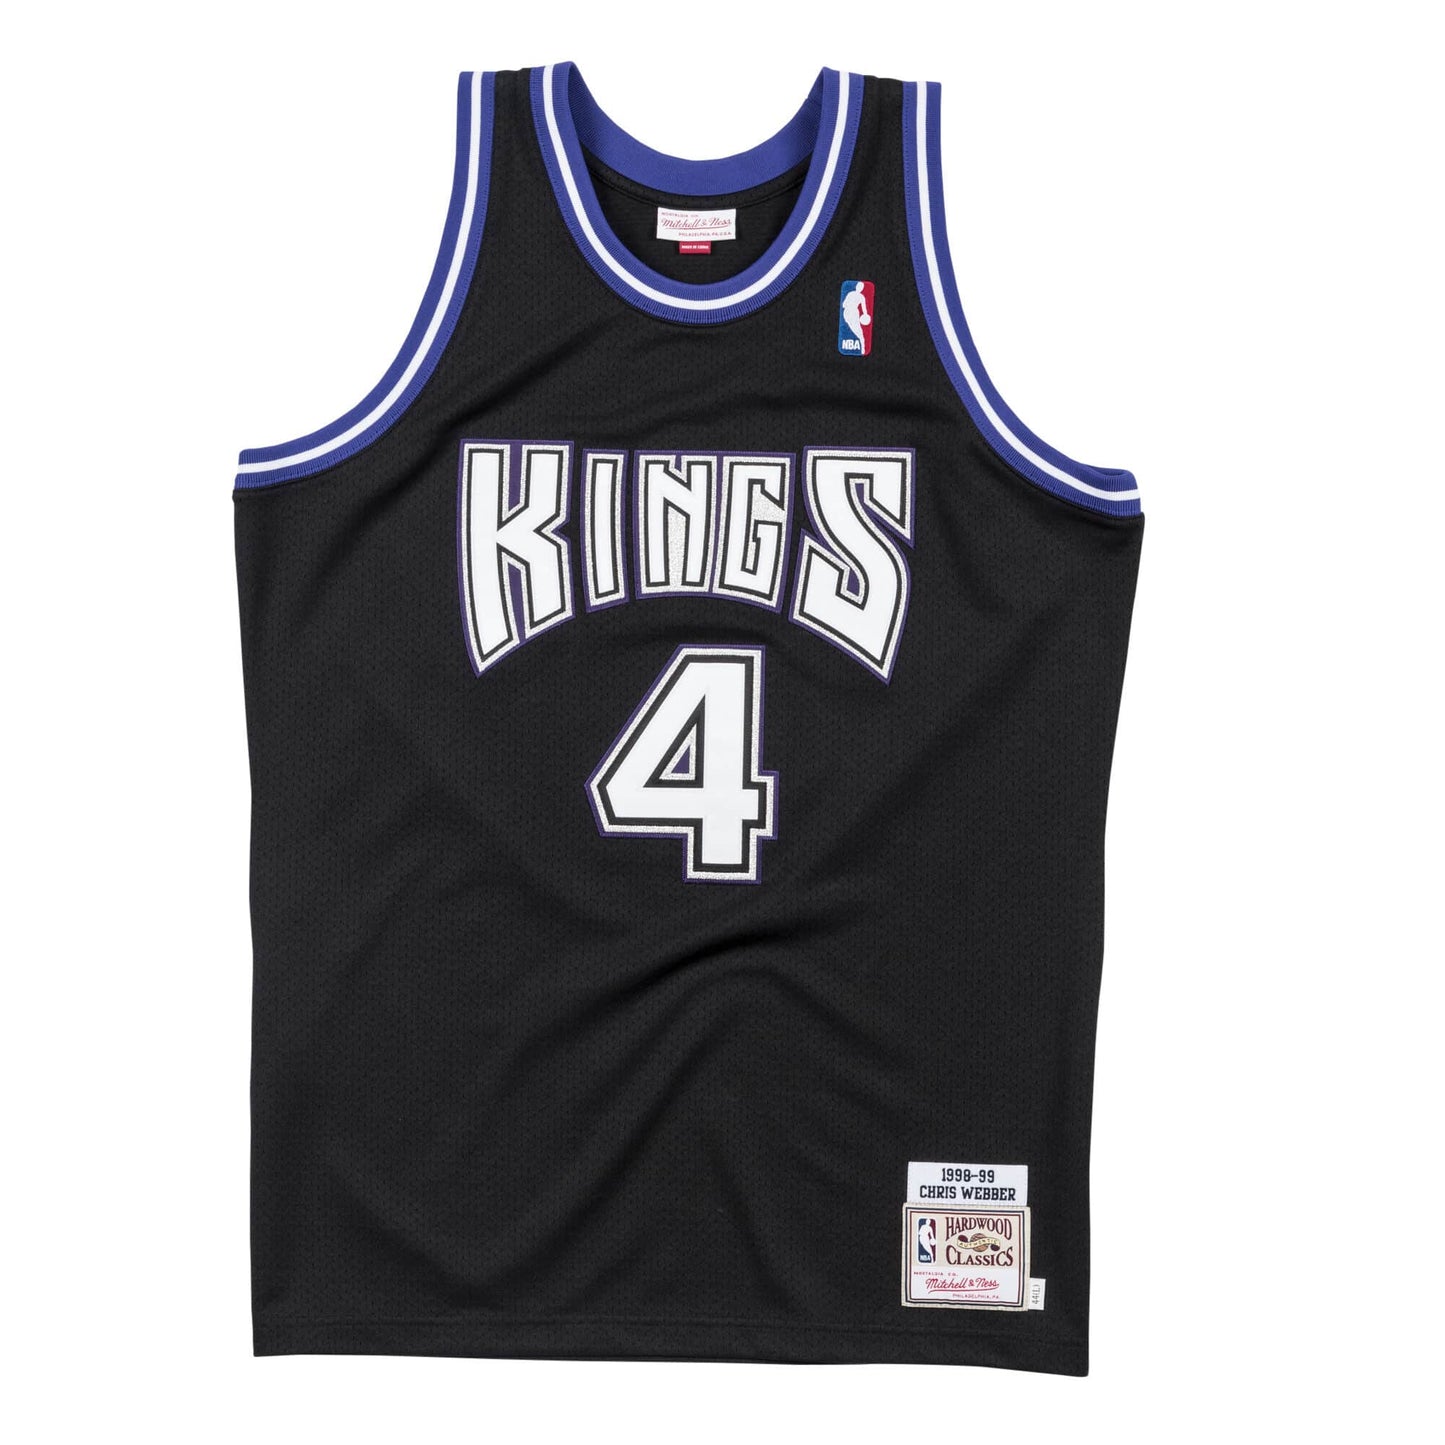 Authentic Jersey Sacramento Kings 1998-99 Chris Webber